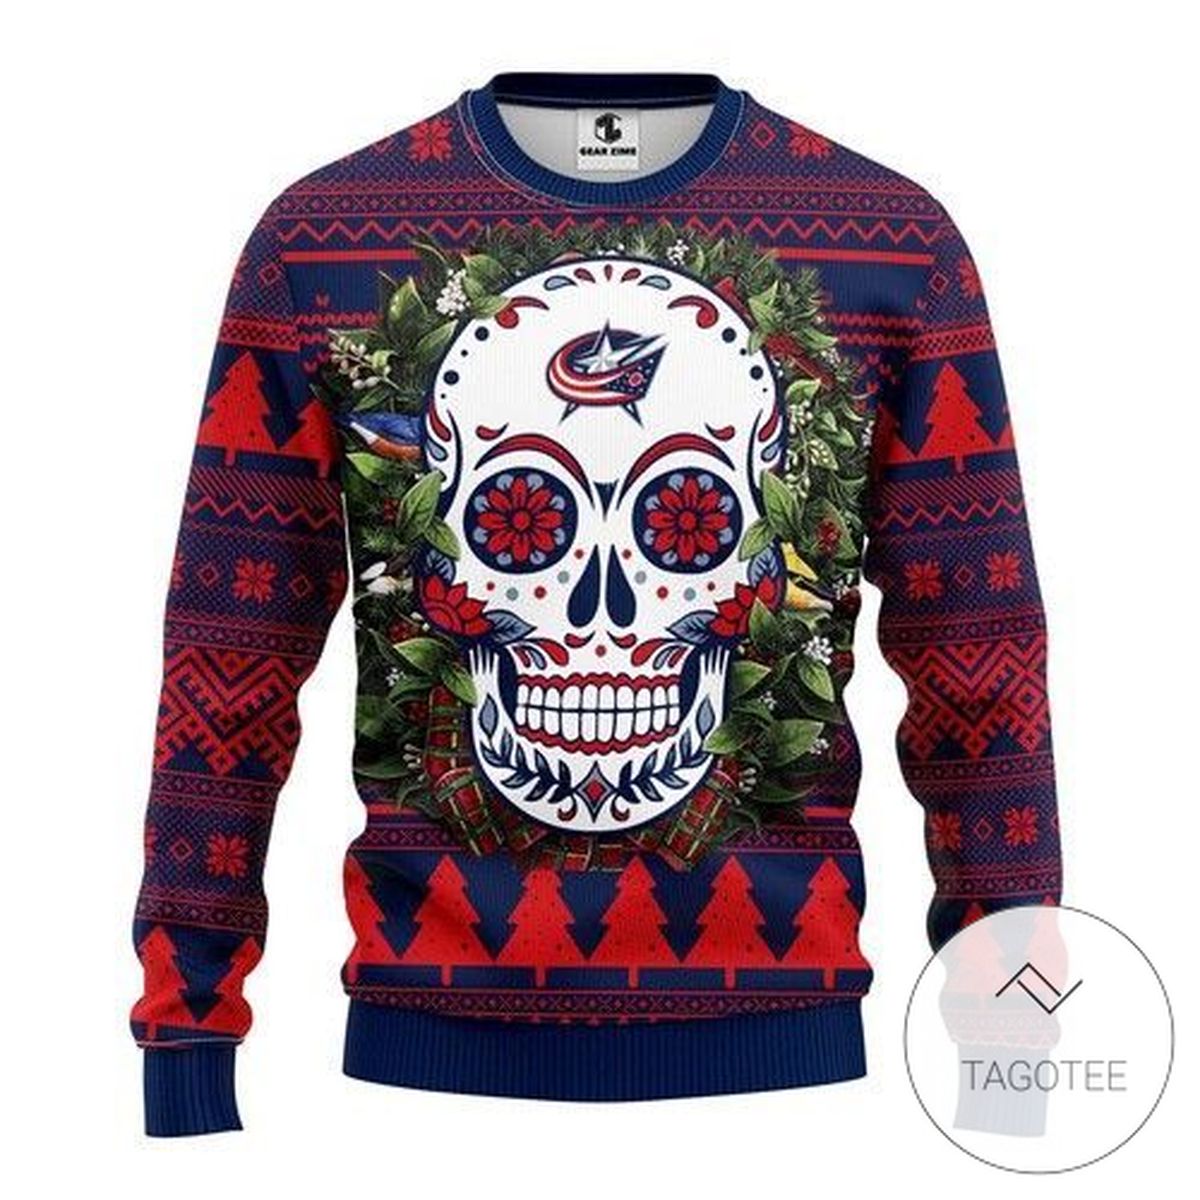 Nhl Columbus Blue Jackets Skull Flower Sweatshirt Knitted Ugly Christmas Sweater